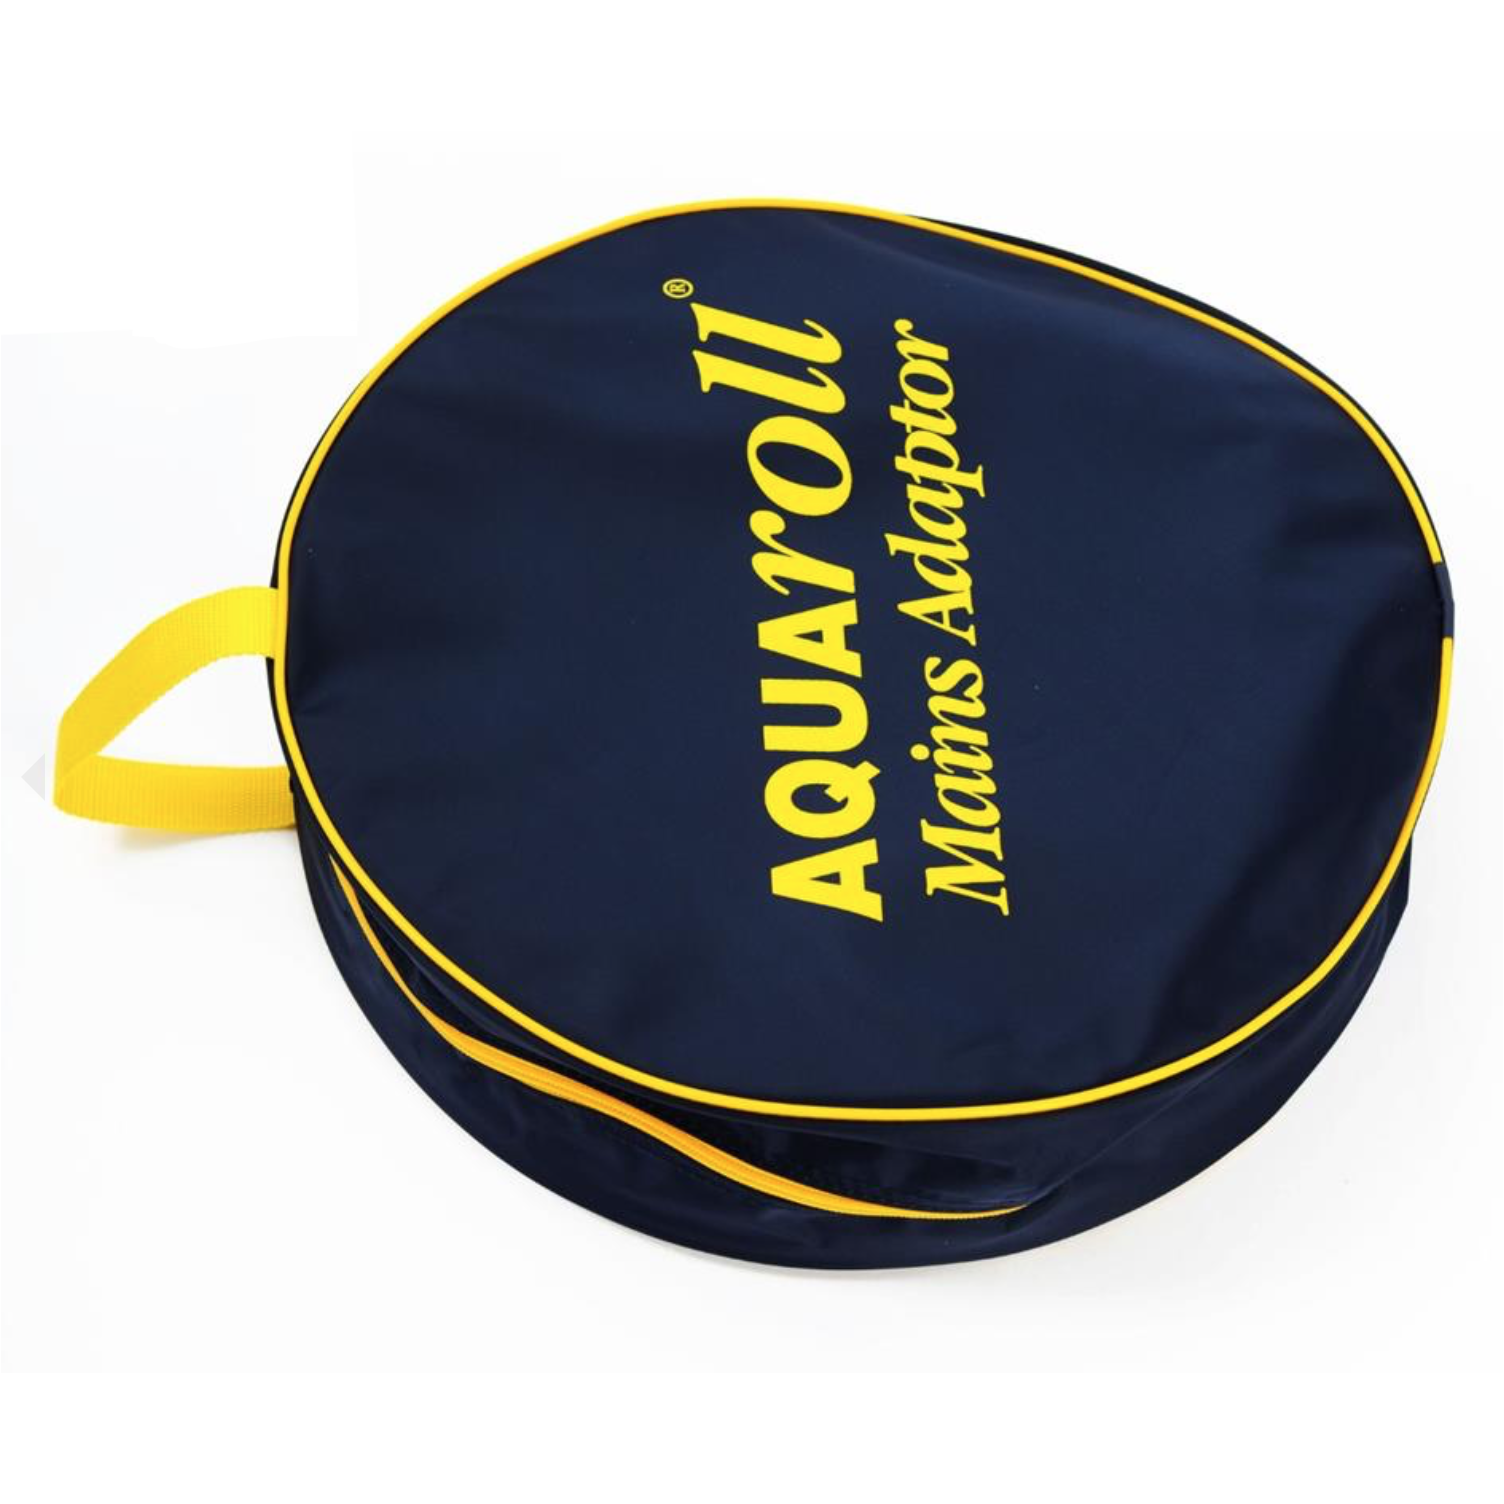 Aquaroll Mains Adaptor Storage Bag